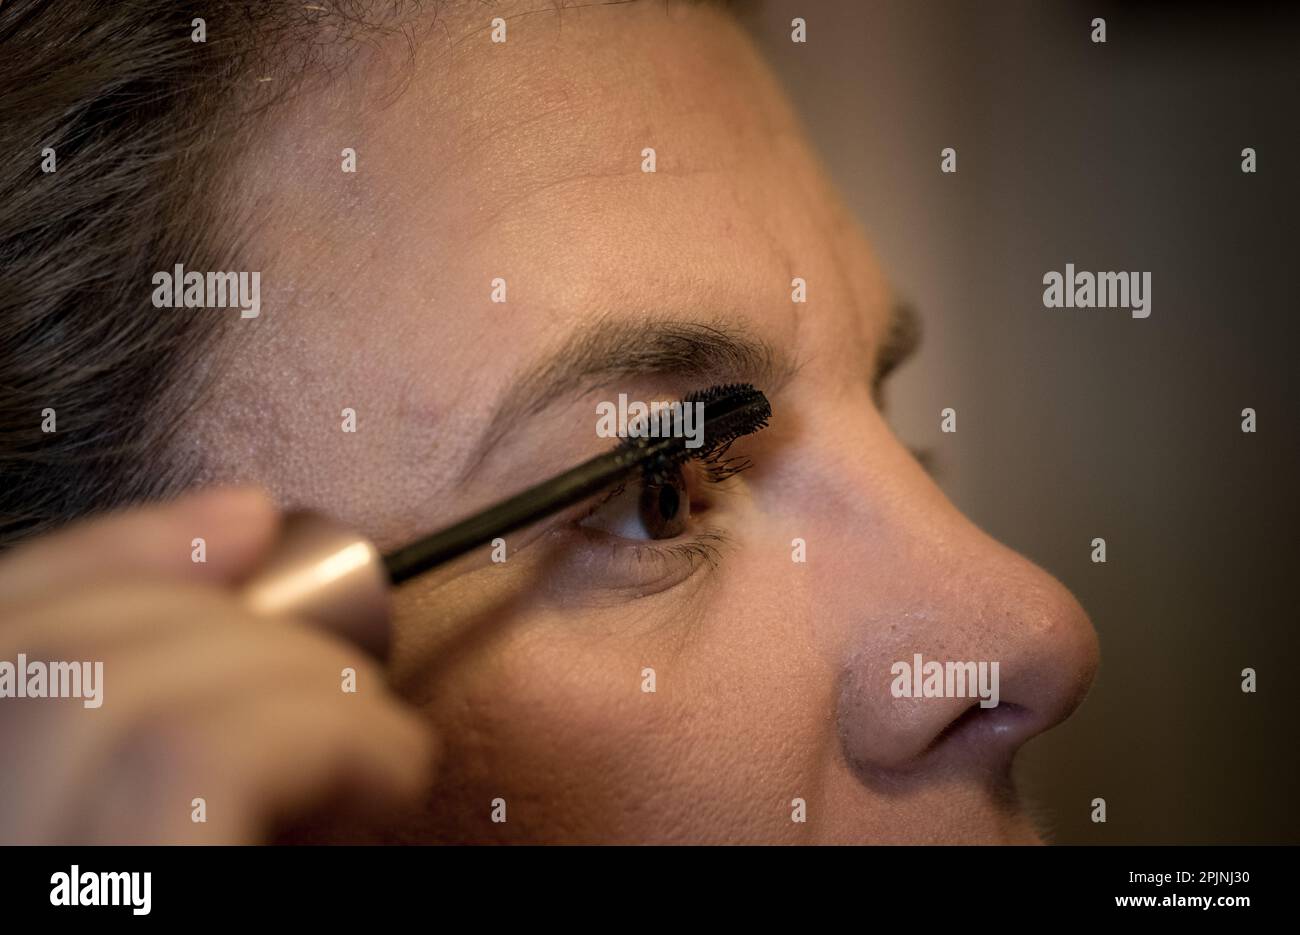 Adult woman applying an eye lash filler or eye brow filler Stock Photo